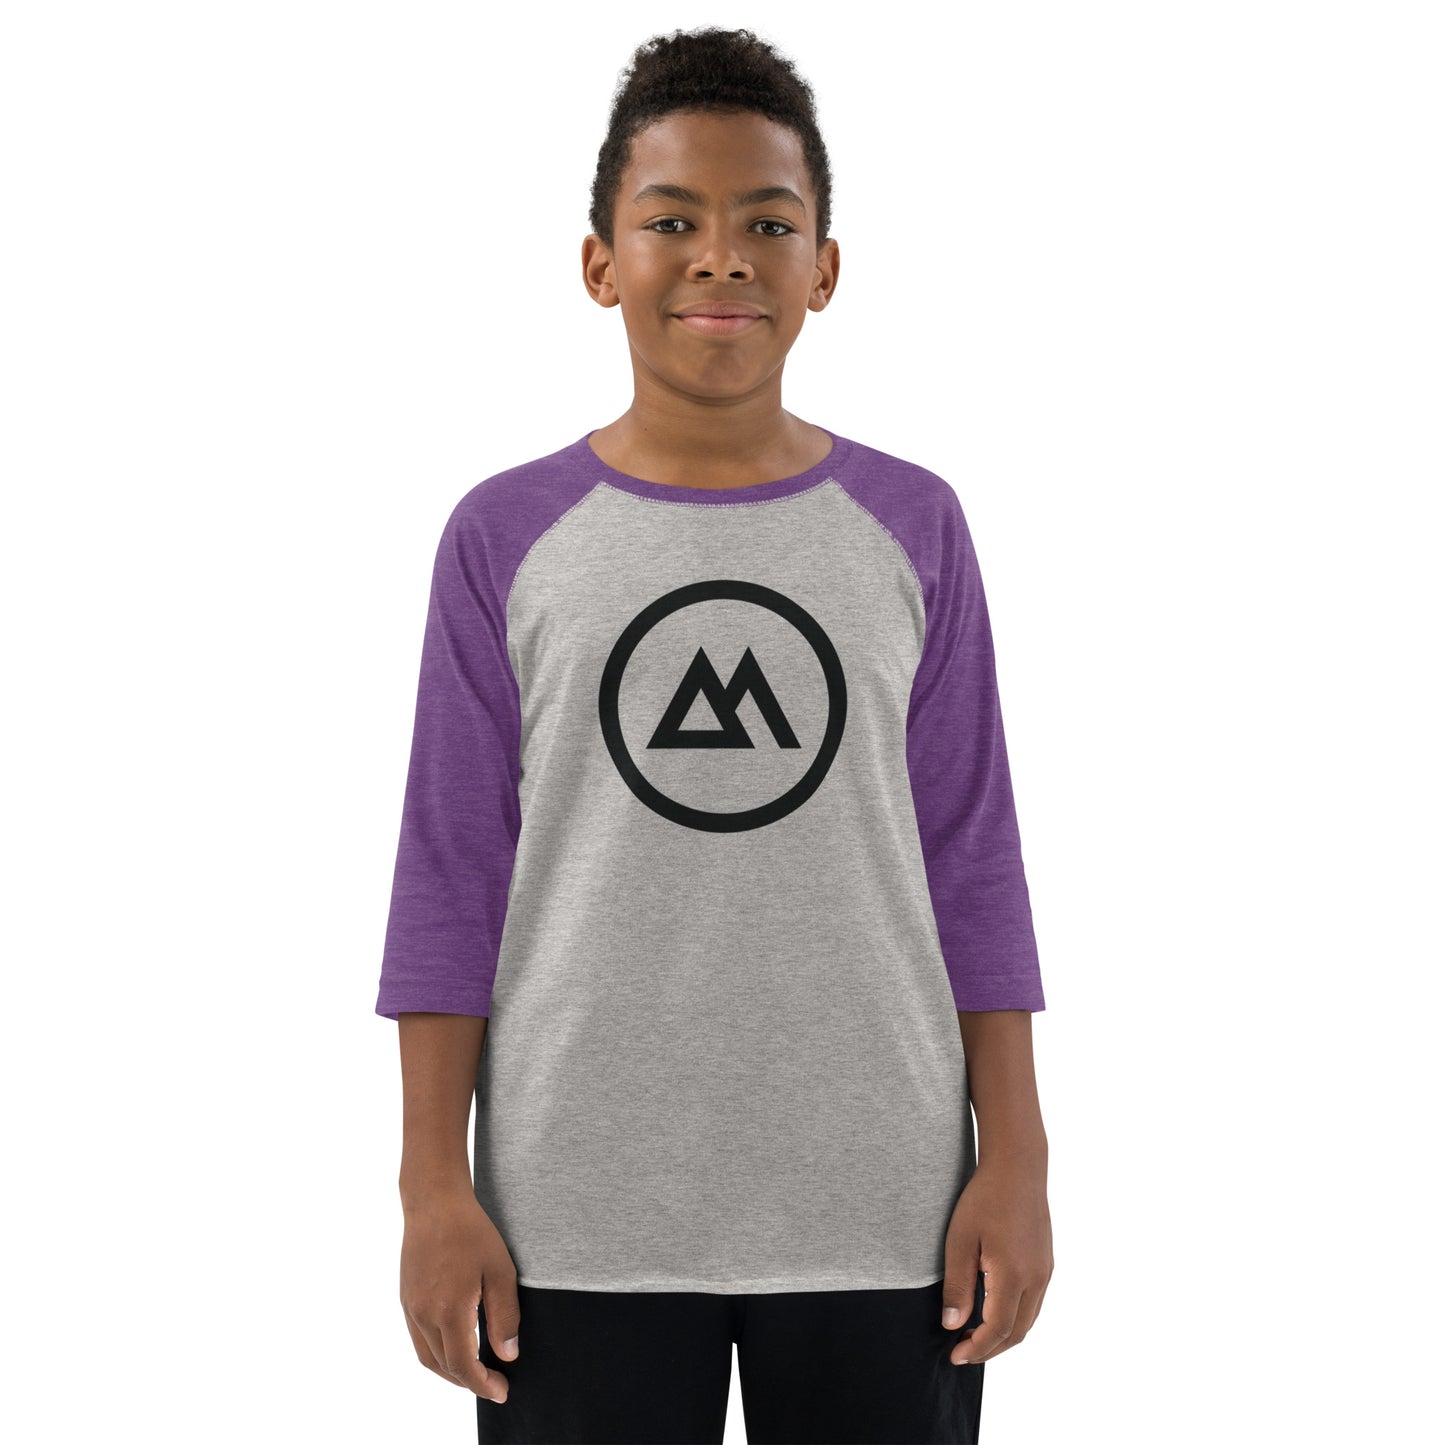 Magneto Kids Shirt